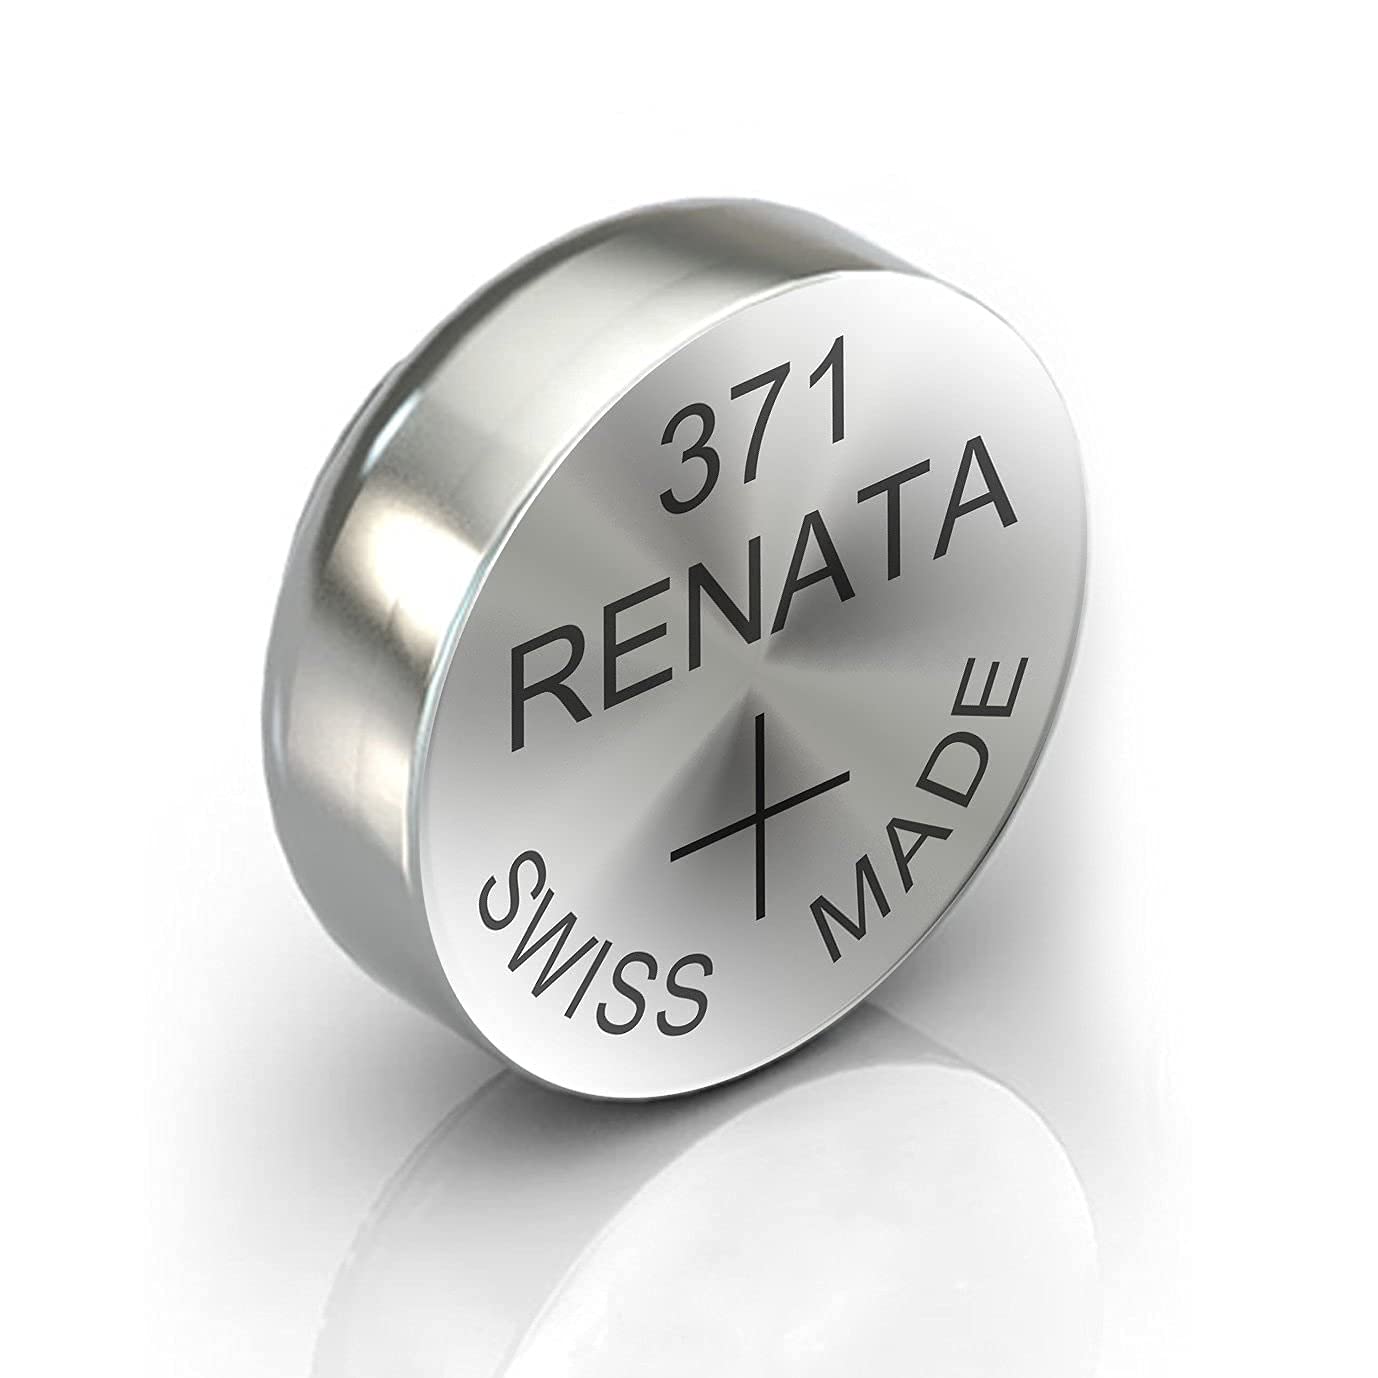 Renata Silver Oxide Battery 1.55V 371 (SR920SW)